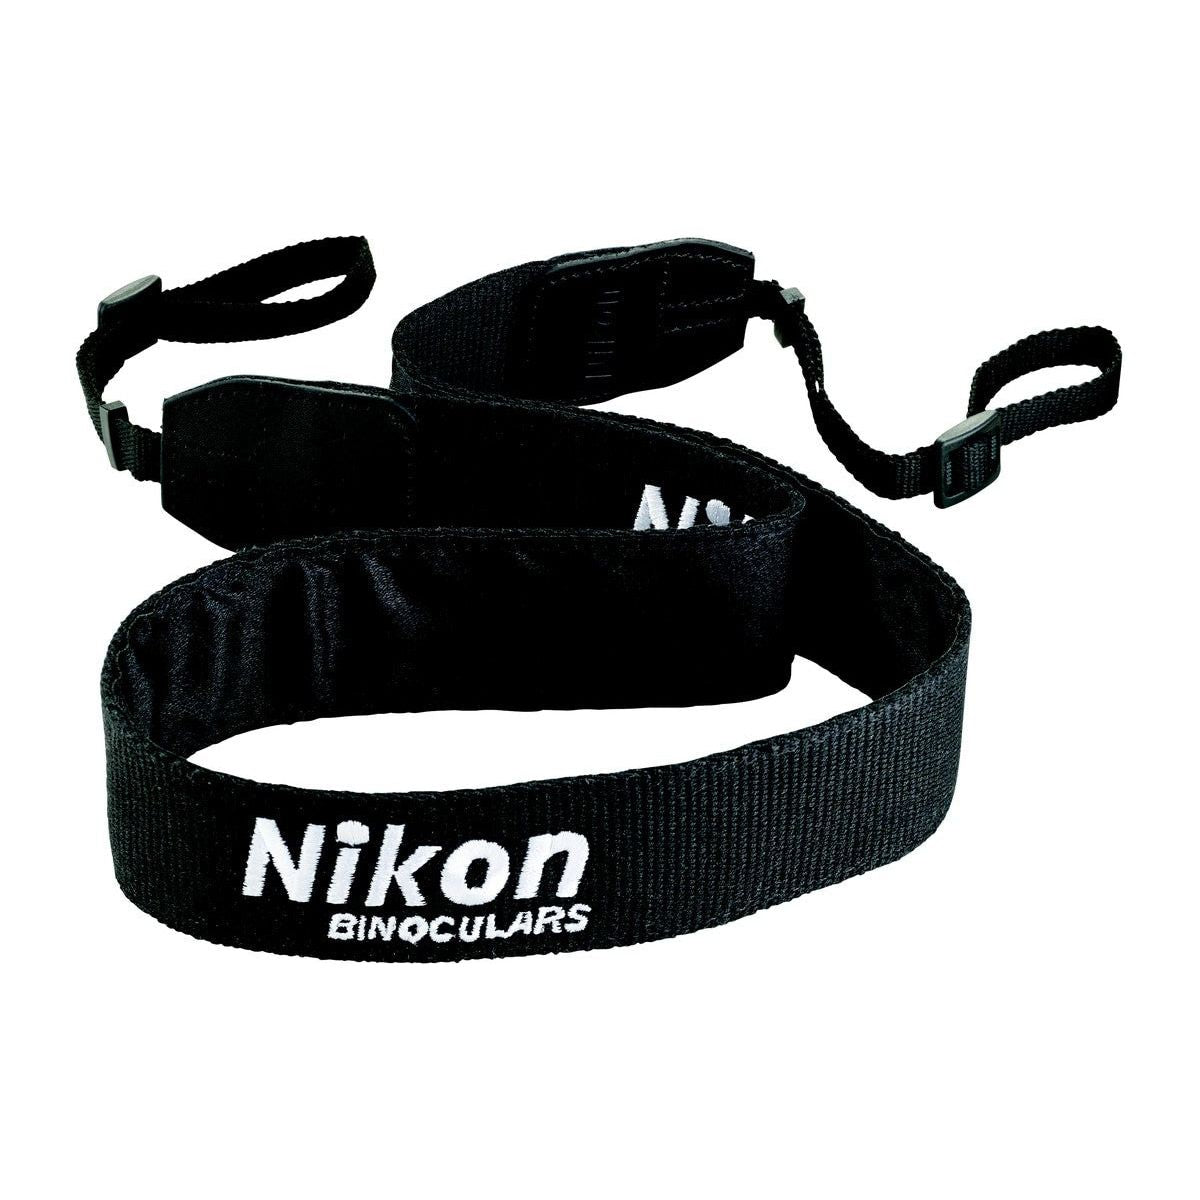 Nikon Binocular Strap